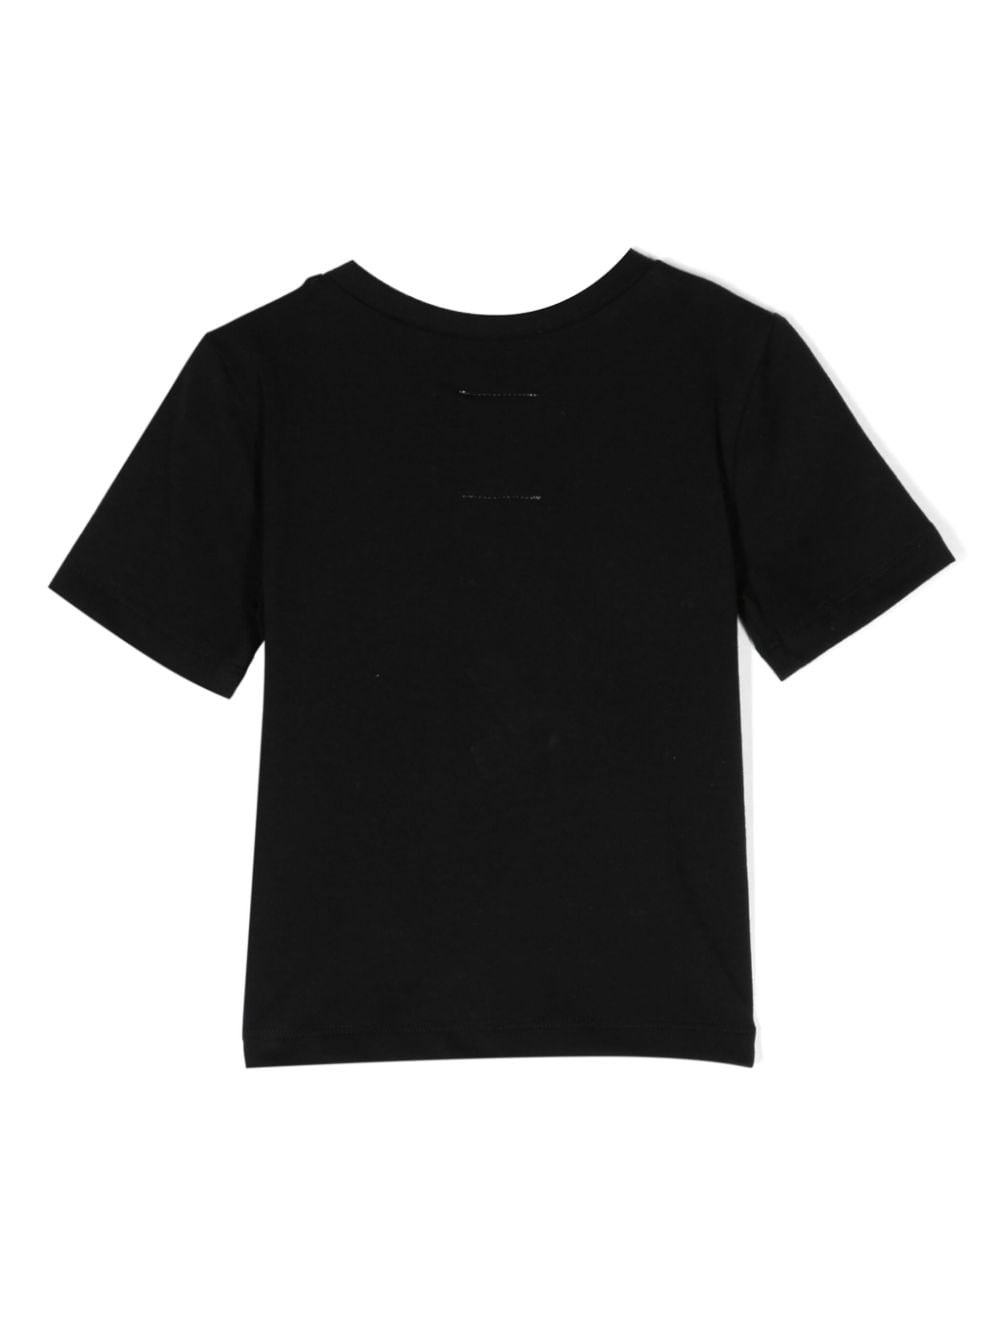 WAUW CAPOW by BANGBANG T-shirt van biologisch katoen Zwart